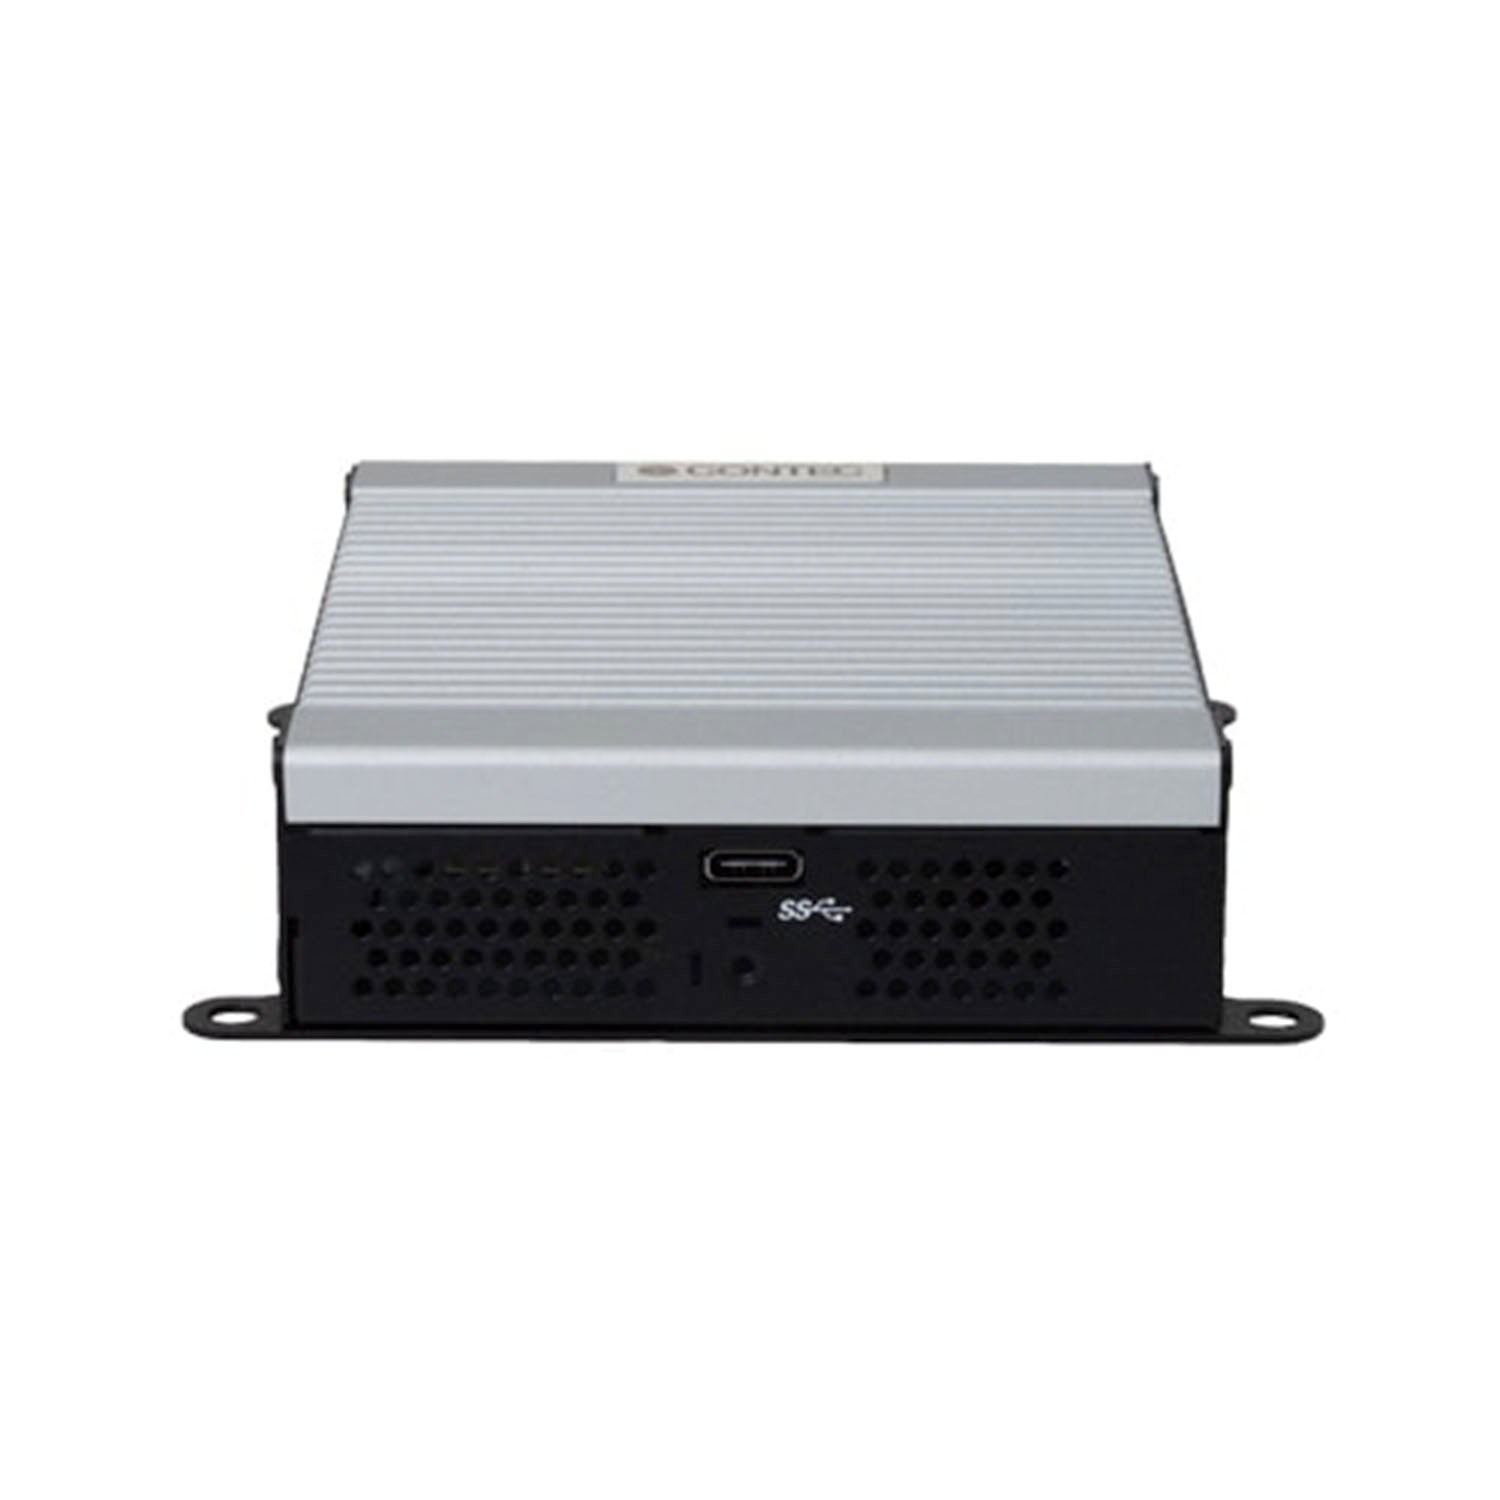 BX-U200 - Fanless Embedded PC / Ultra small design / Atom x5-E3940 (Apollo Lake)